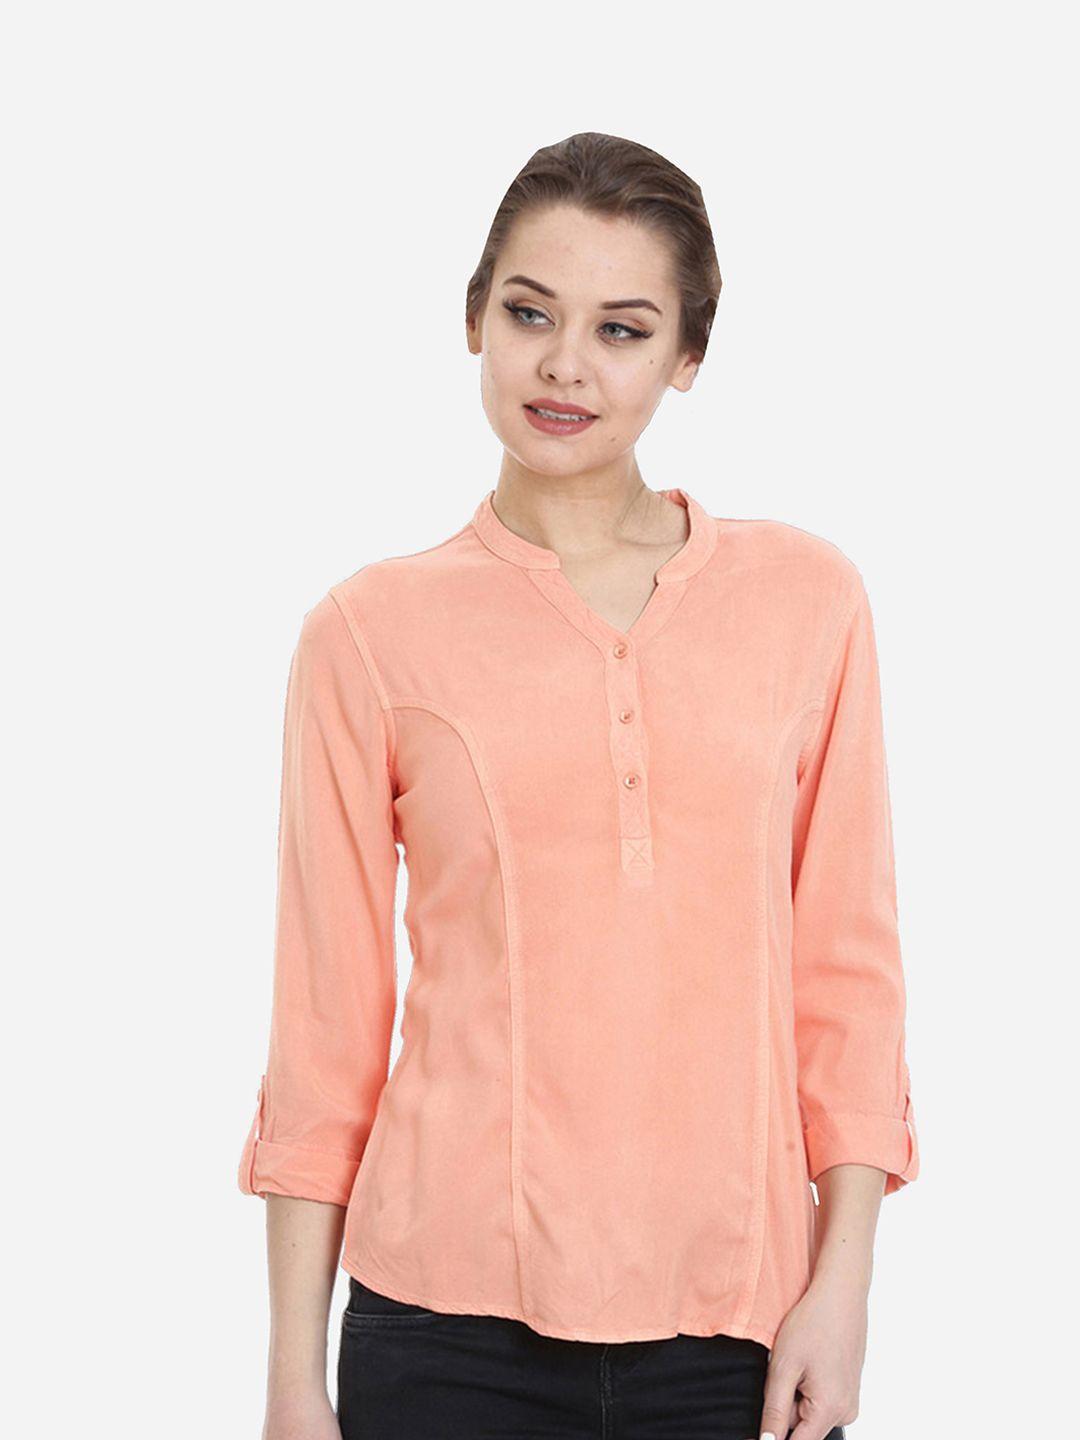 identiti peach-coloured solid shirt style top